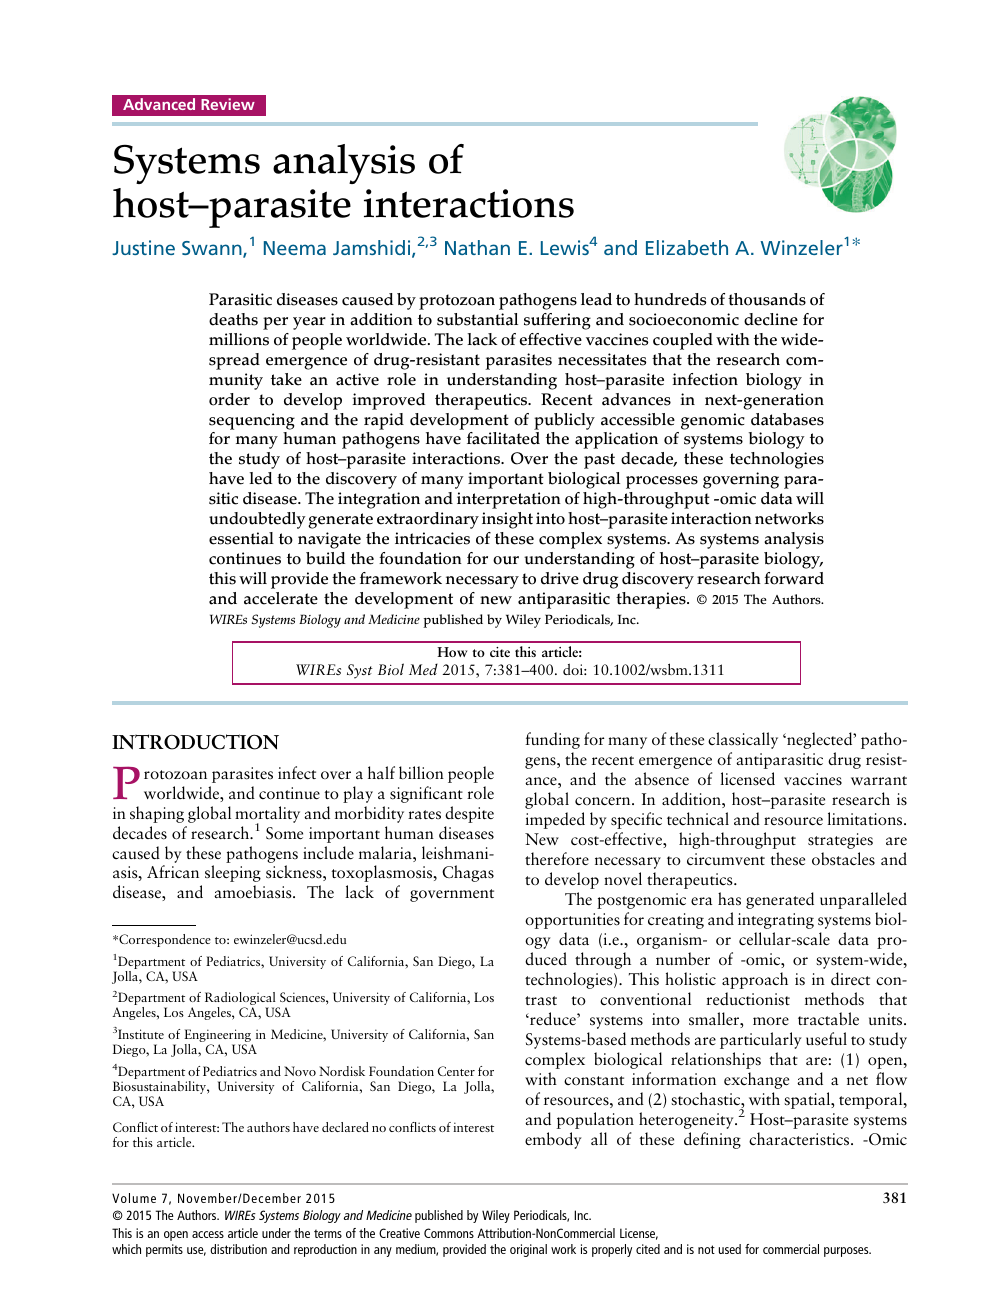 analize specifice paraziti unguent de papilomavirus uman